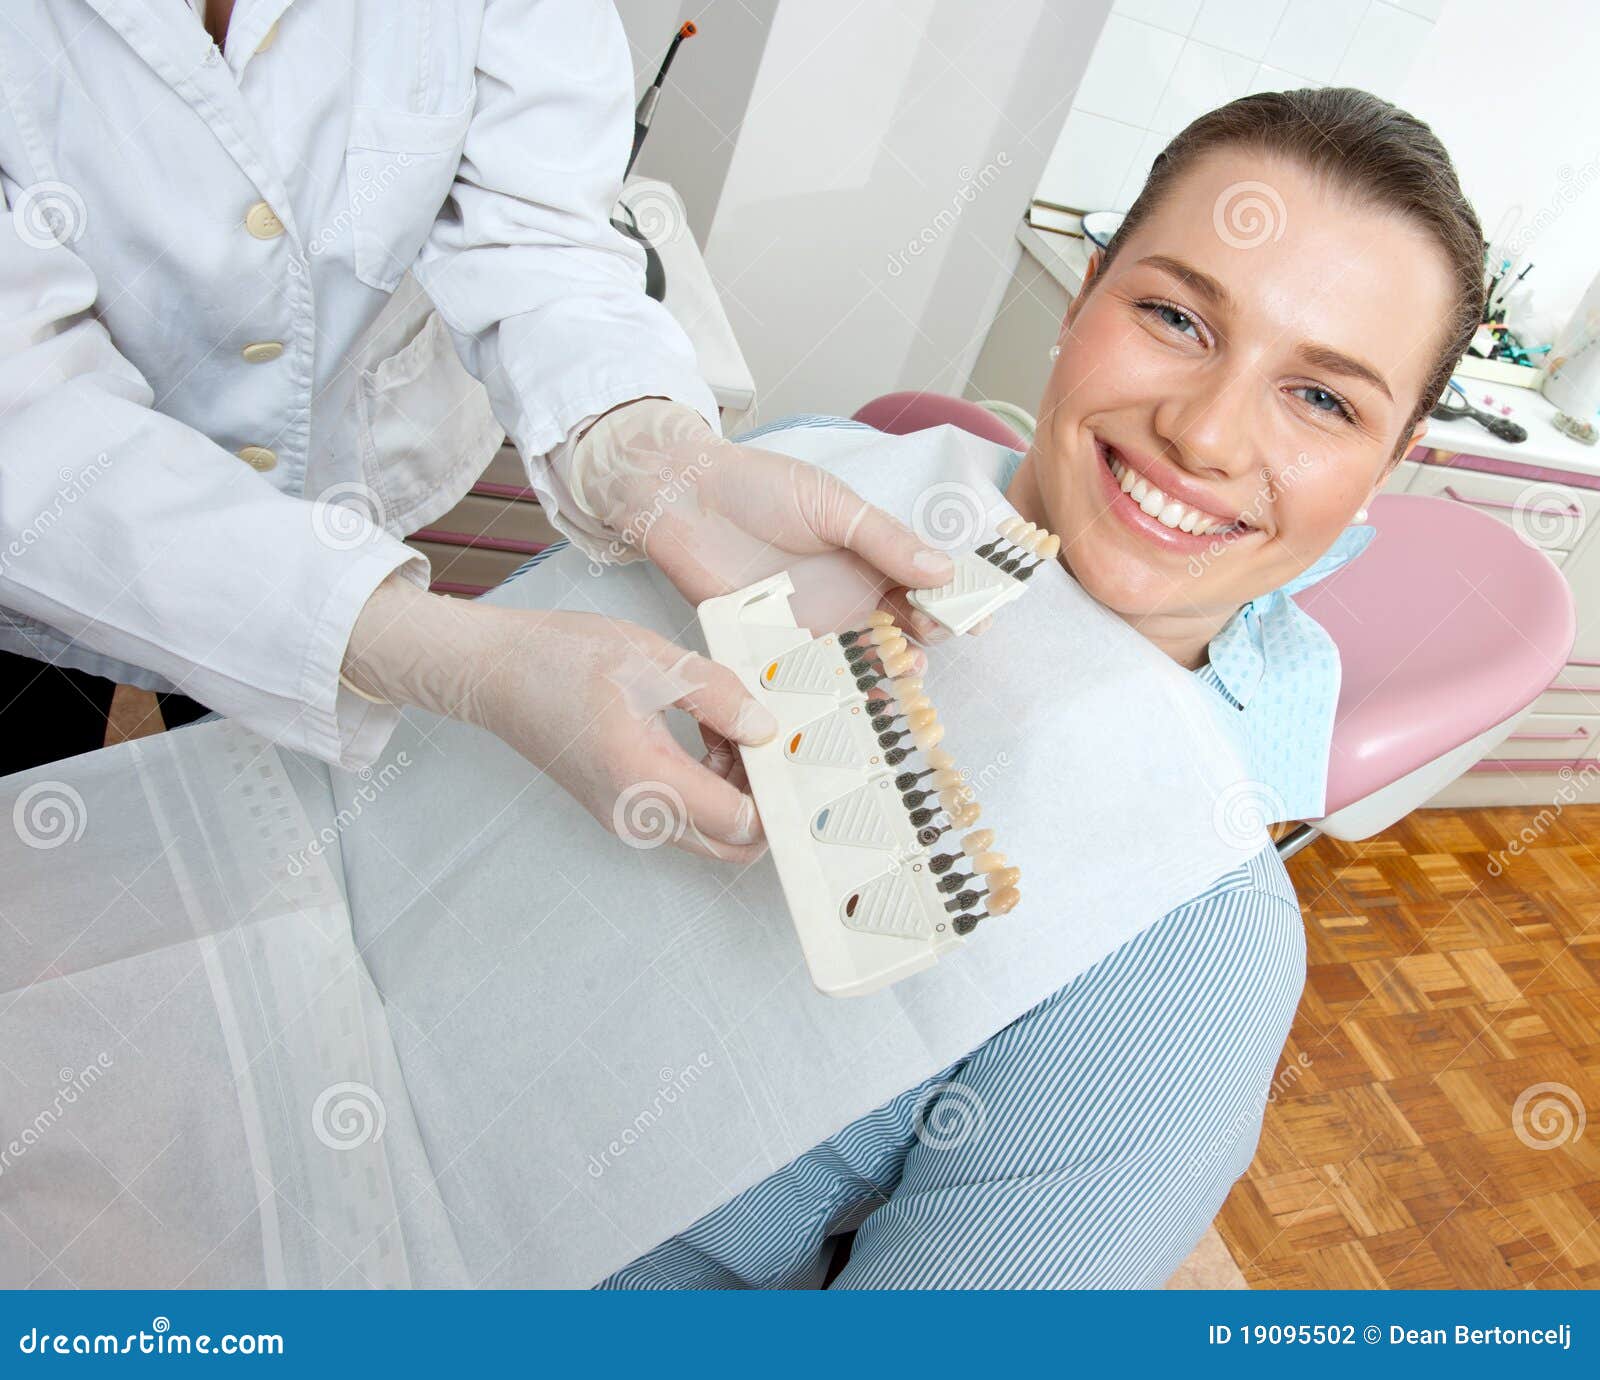 woman choosing denture